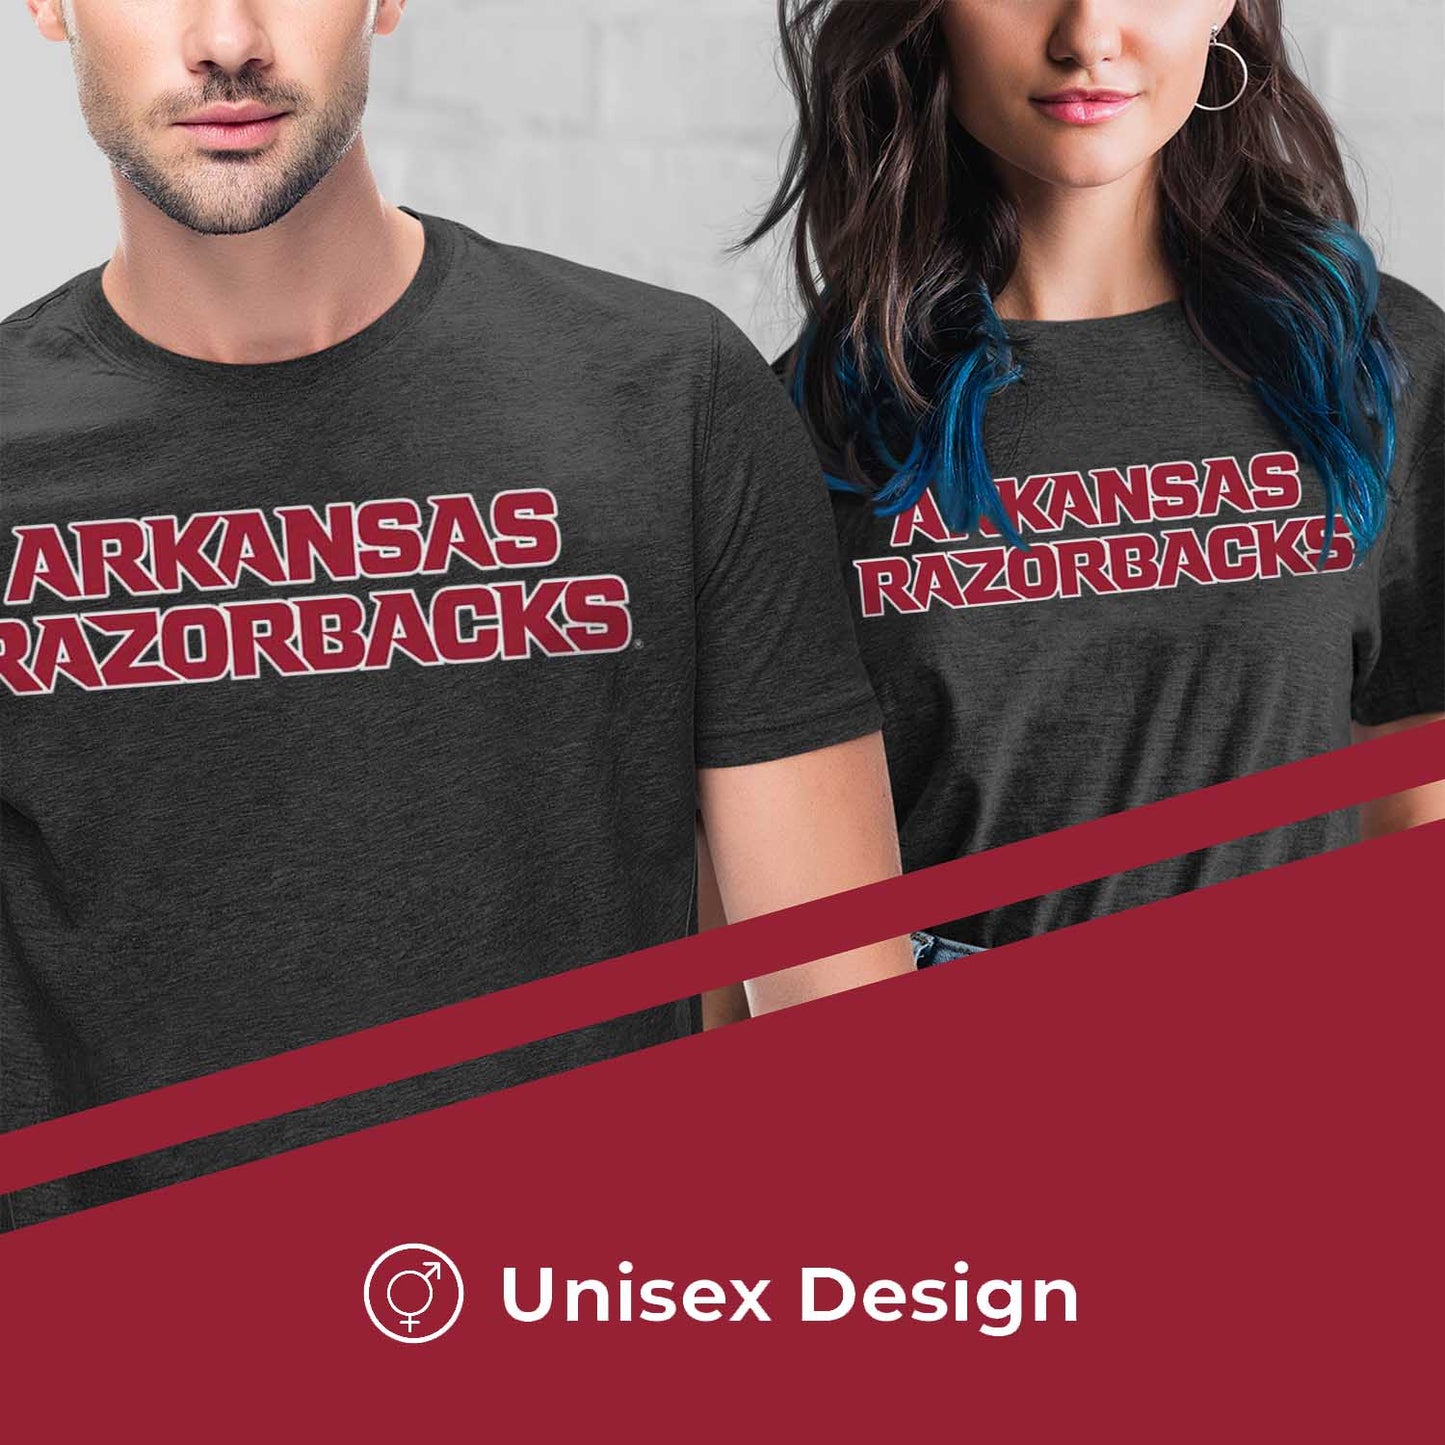 Arkansas Razorbacks Campus Colors NCAA Adult Cotton Blend Charcoal Tagless T-Shirt - Charcoal